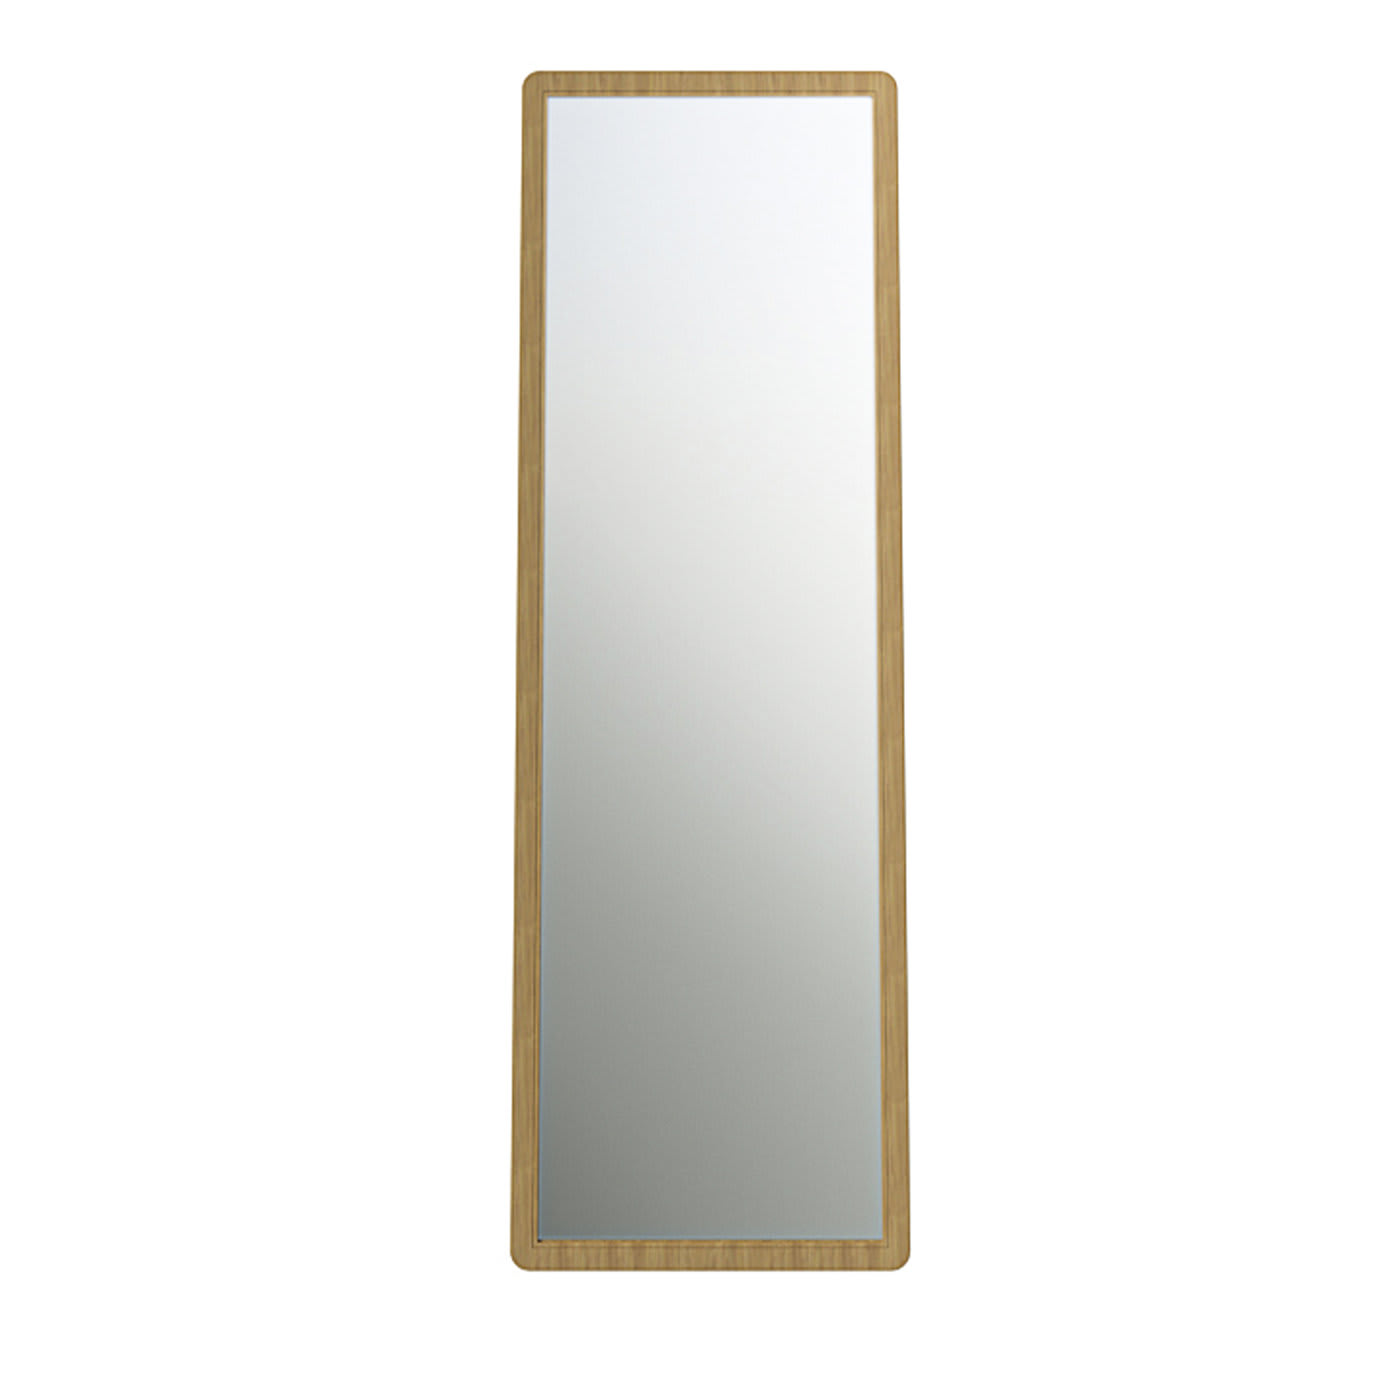 Fai M01 Oak Narrow Rectangular Mirror by Naji Mourani - 2K1M